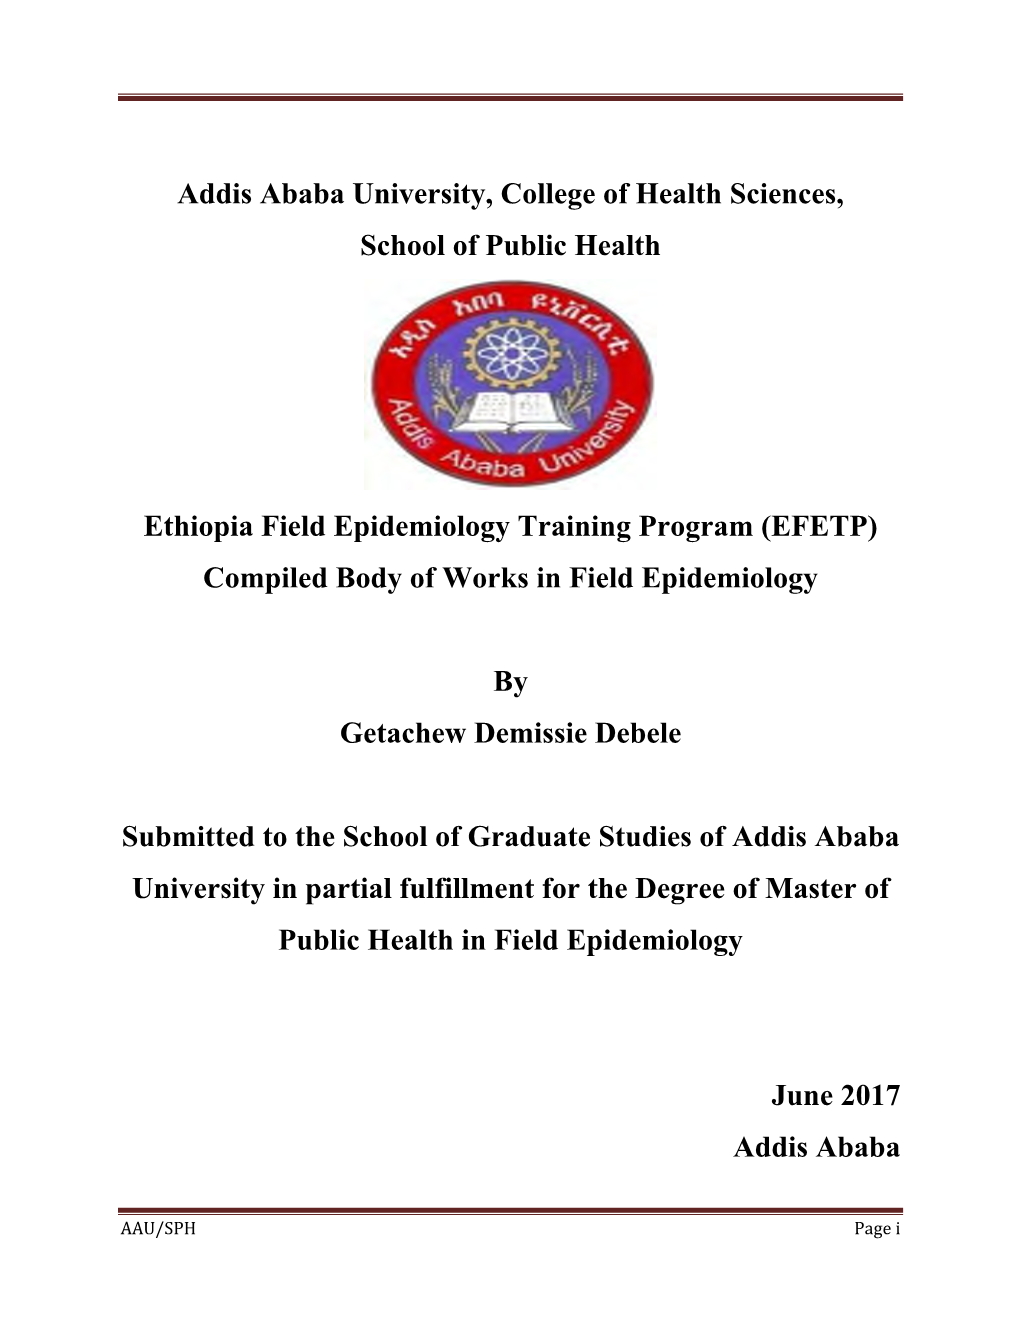 Addis Ababa University, College of Health Sciences, School of Public Health